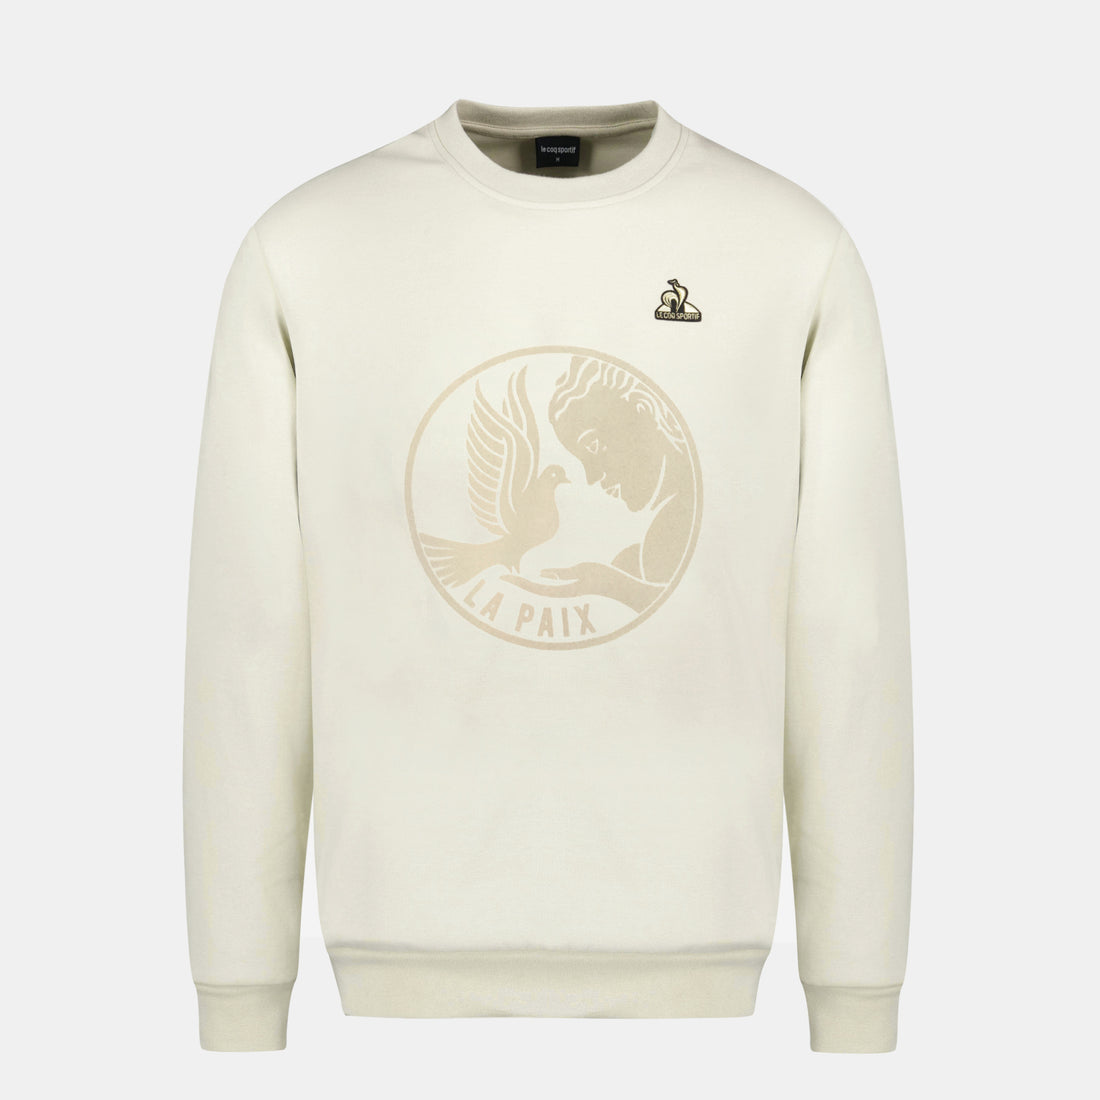 2411180-LA PAIX Crew Sweat N°1 M peyote  | Round-Neck Sweatshirtshirt motif «La Paix» for men